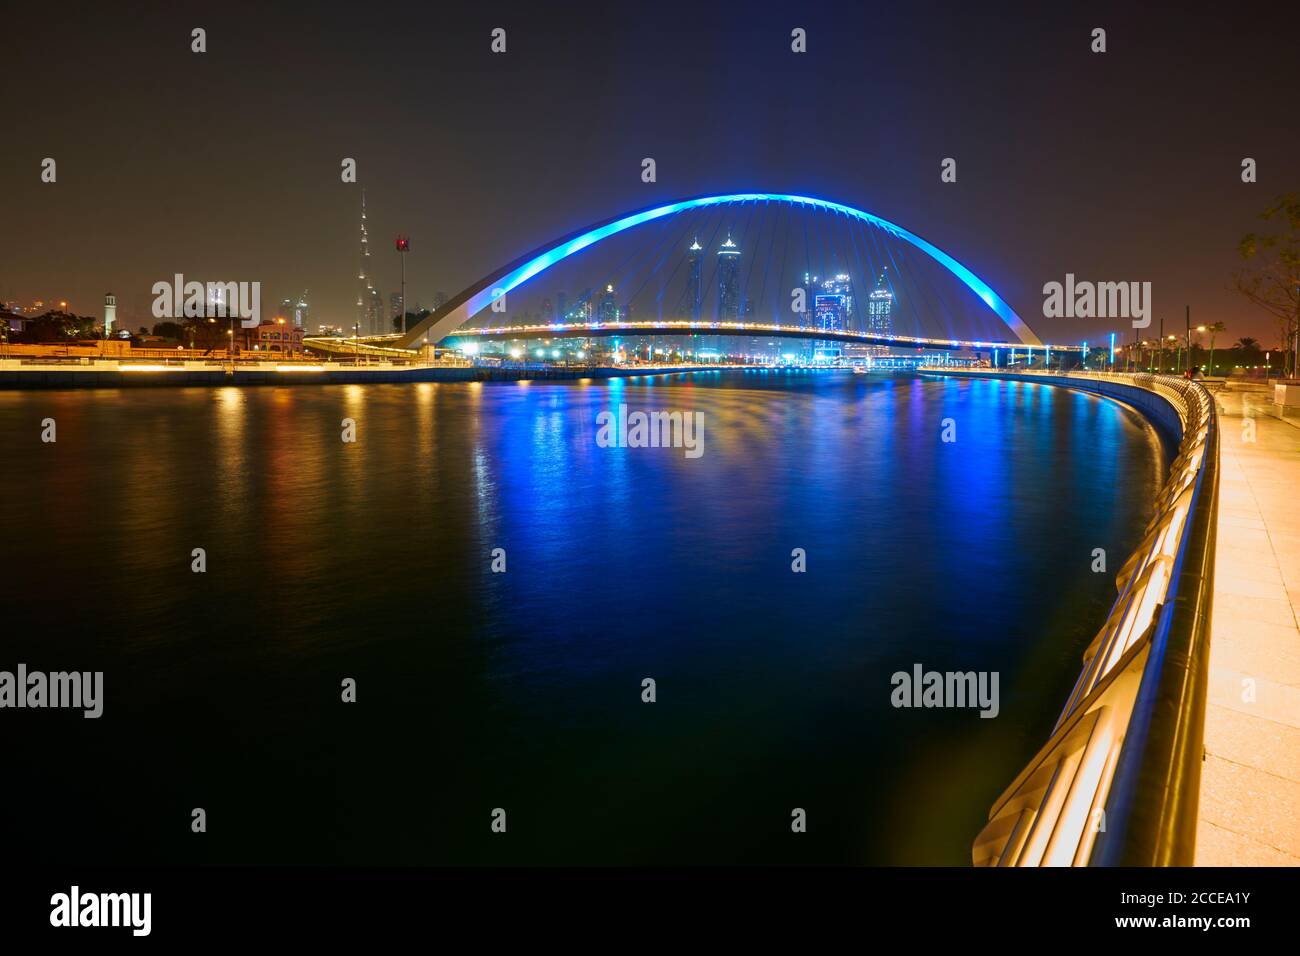 Dubai, Emiratos Árabes Unidos, Emiratos Árabes Unidos, Oriente Medio, África, puente iluminado, puente de tolerancia, puente peatonal, Foto de stock